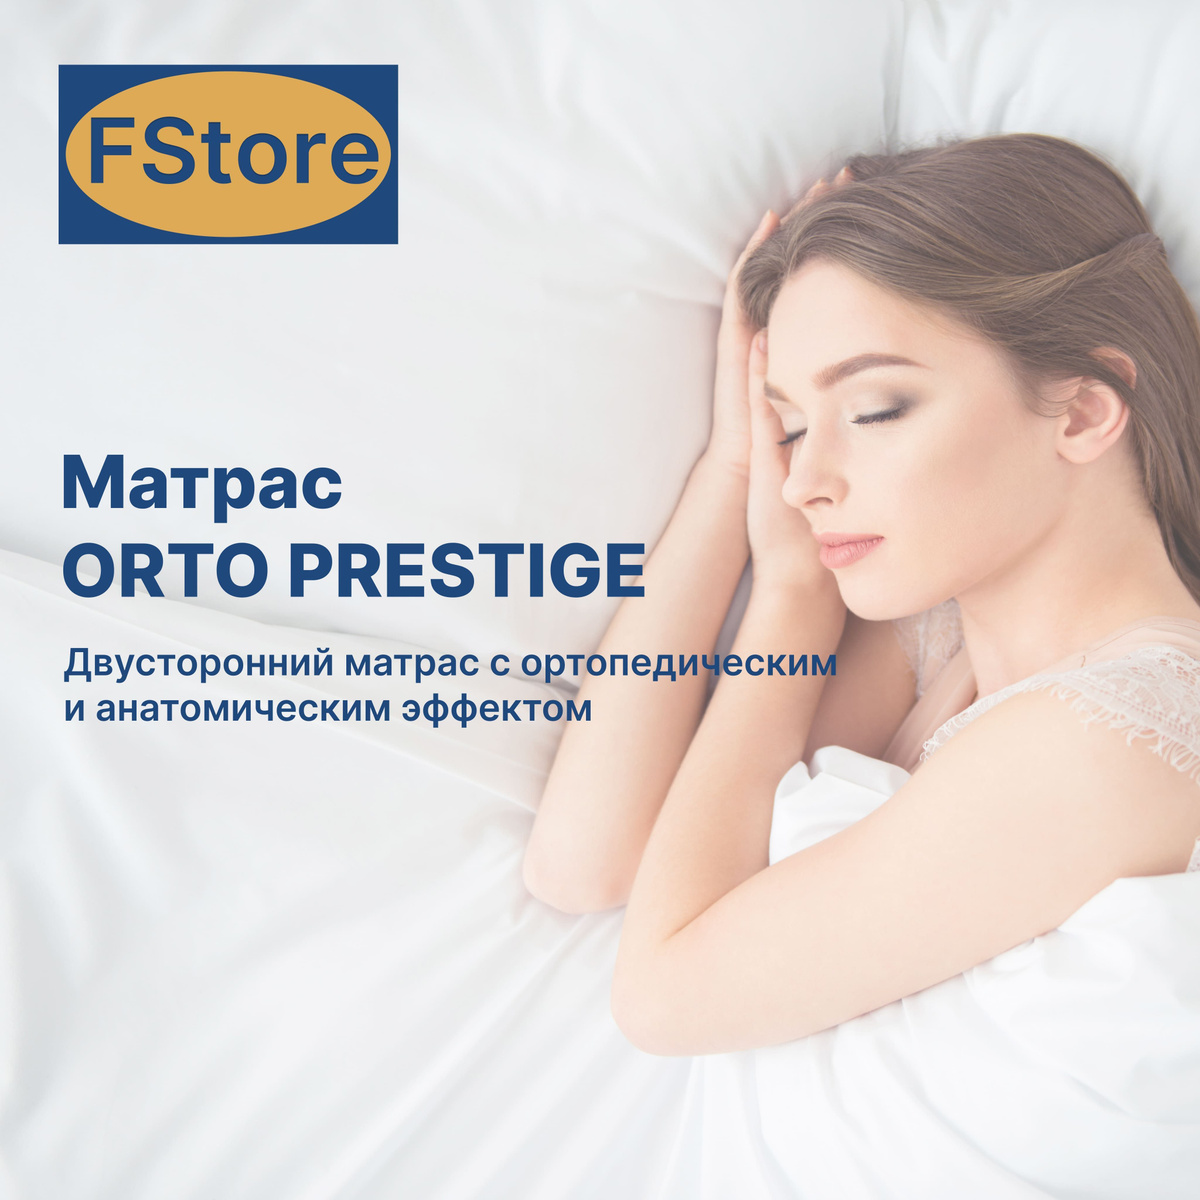 Матрас FStore Orto Prestige